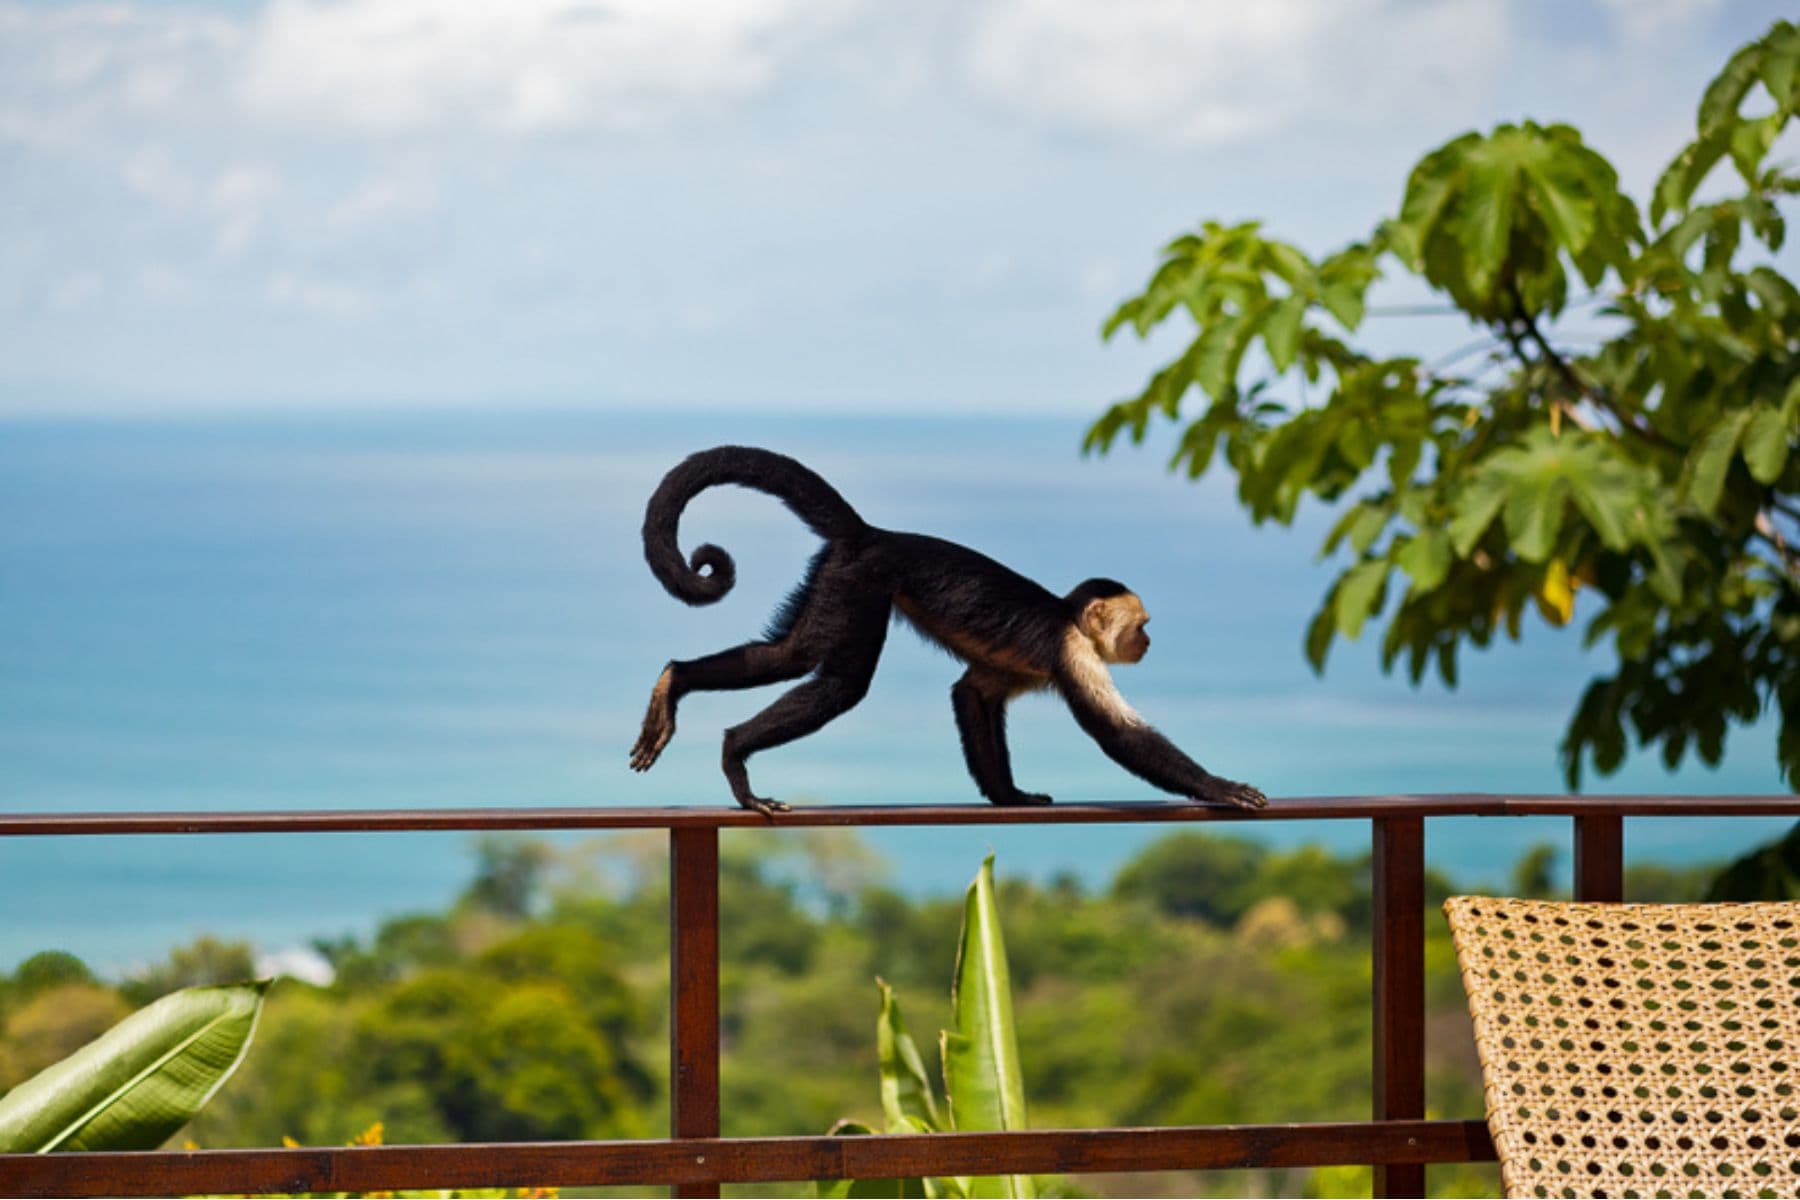 Capuchin monkey in Costa Rica's Osa Peninsula. Photo by Teri K. Miller